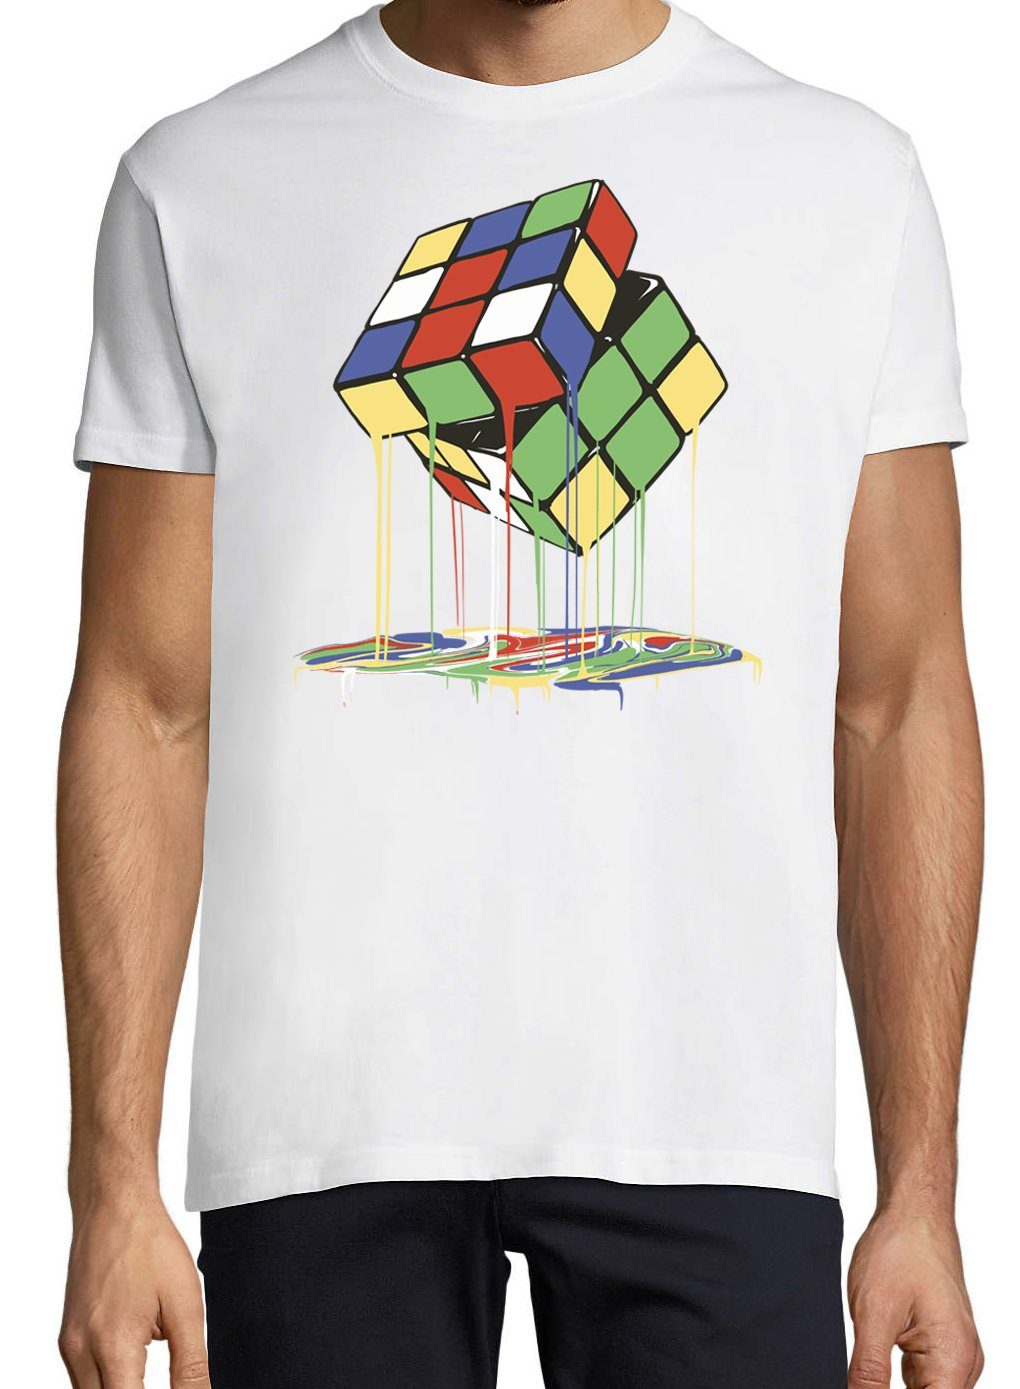 Frontdruck Designz Youth T-Shirt Melting Trendigem mit Herren Weiss Magic Cube Shirt